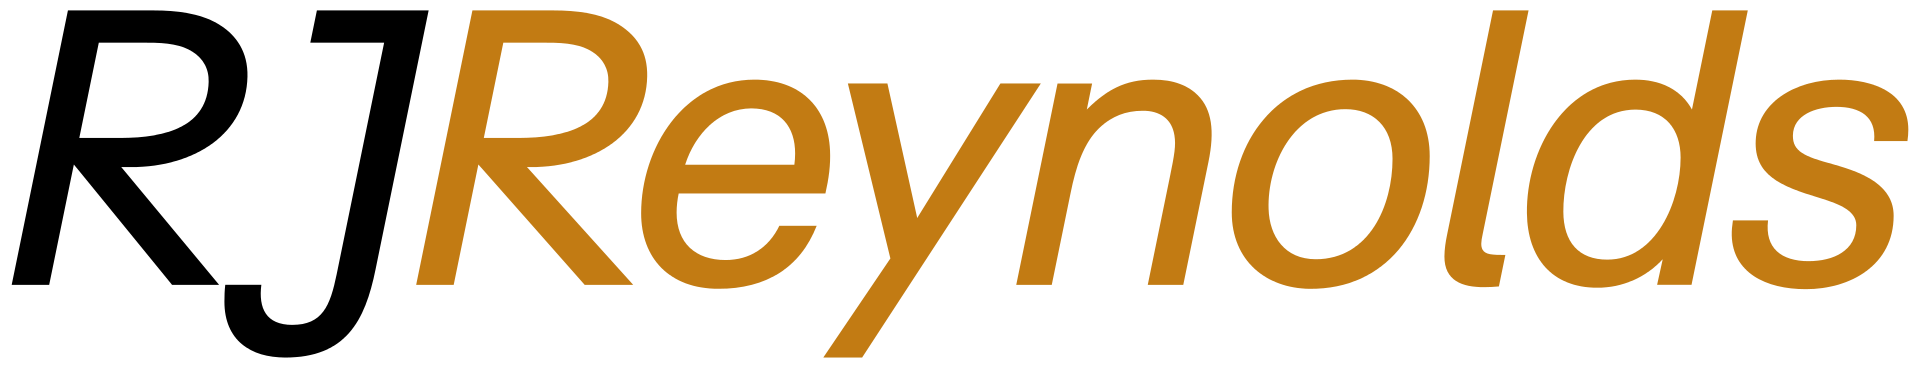 R. J. Reynolds Tobacco Company Logo